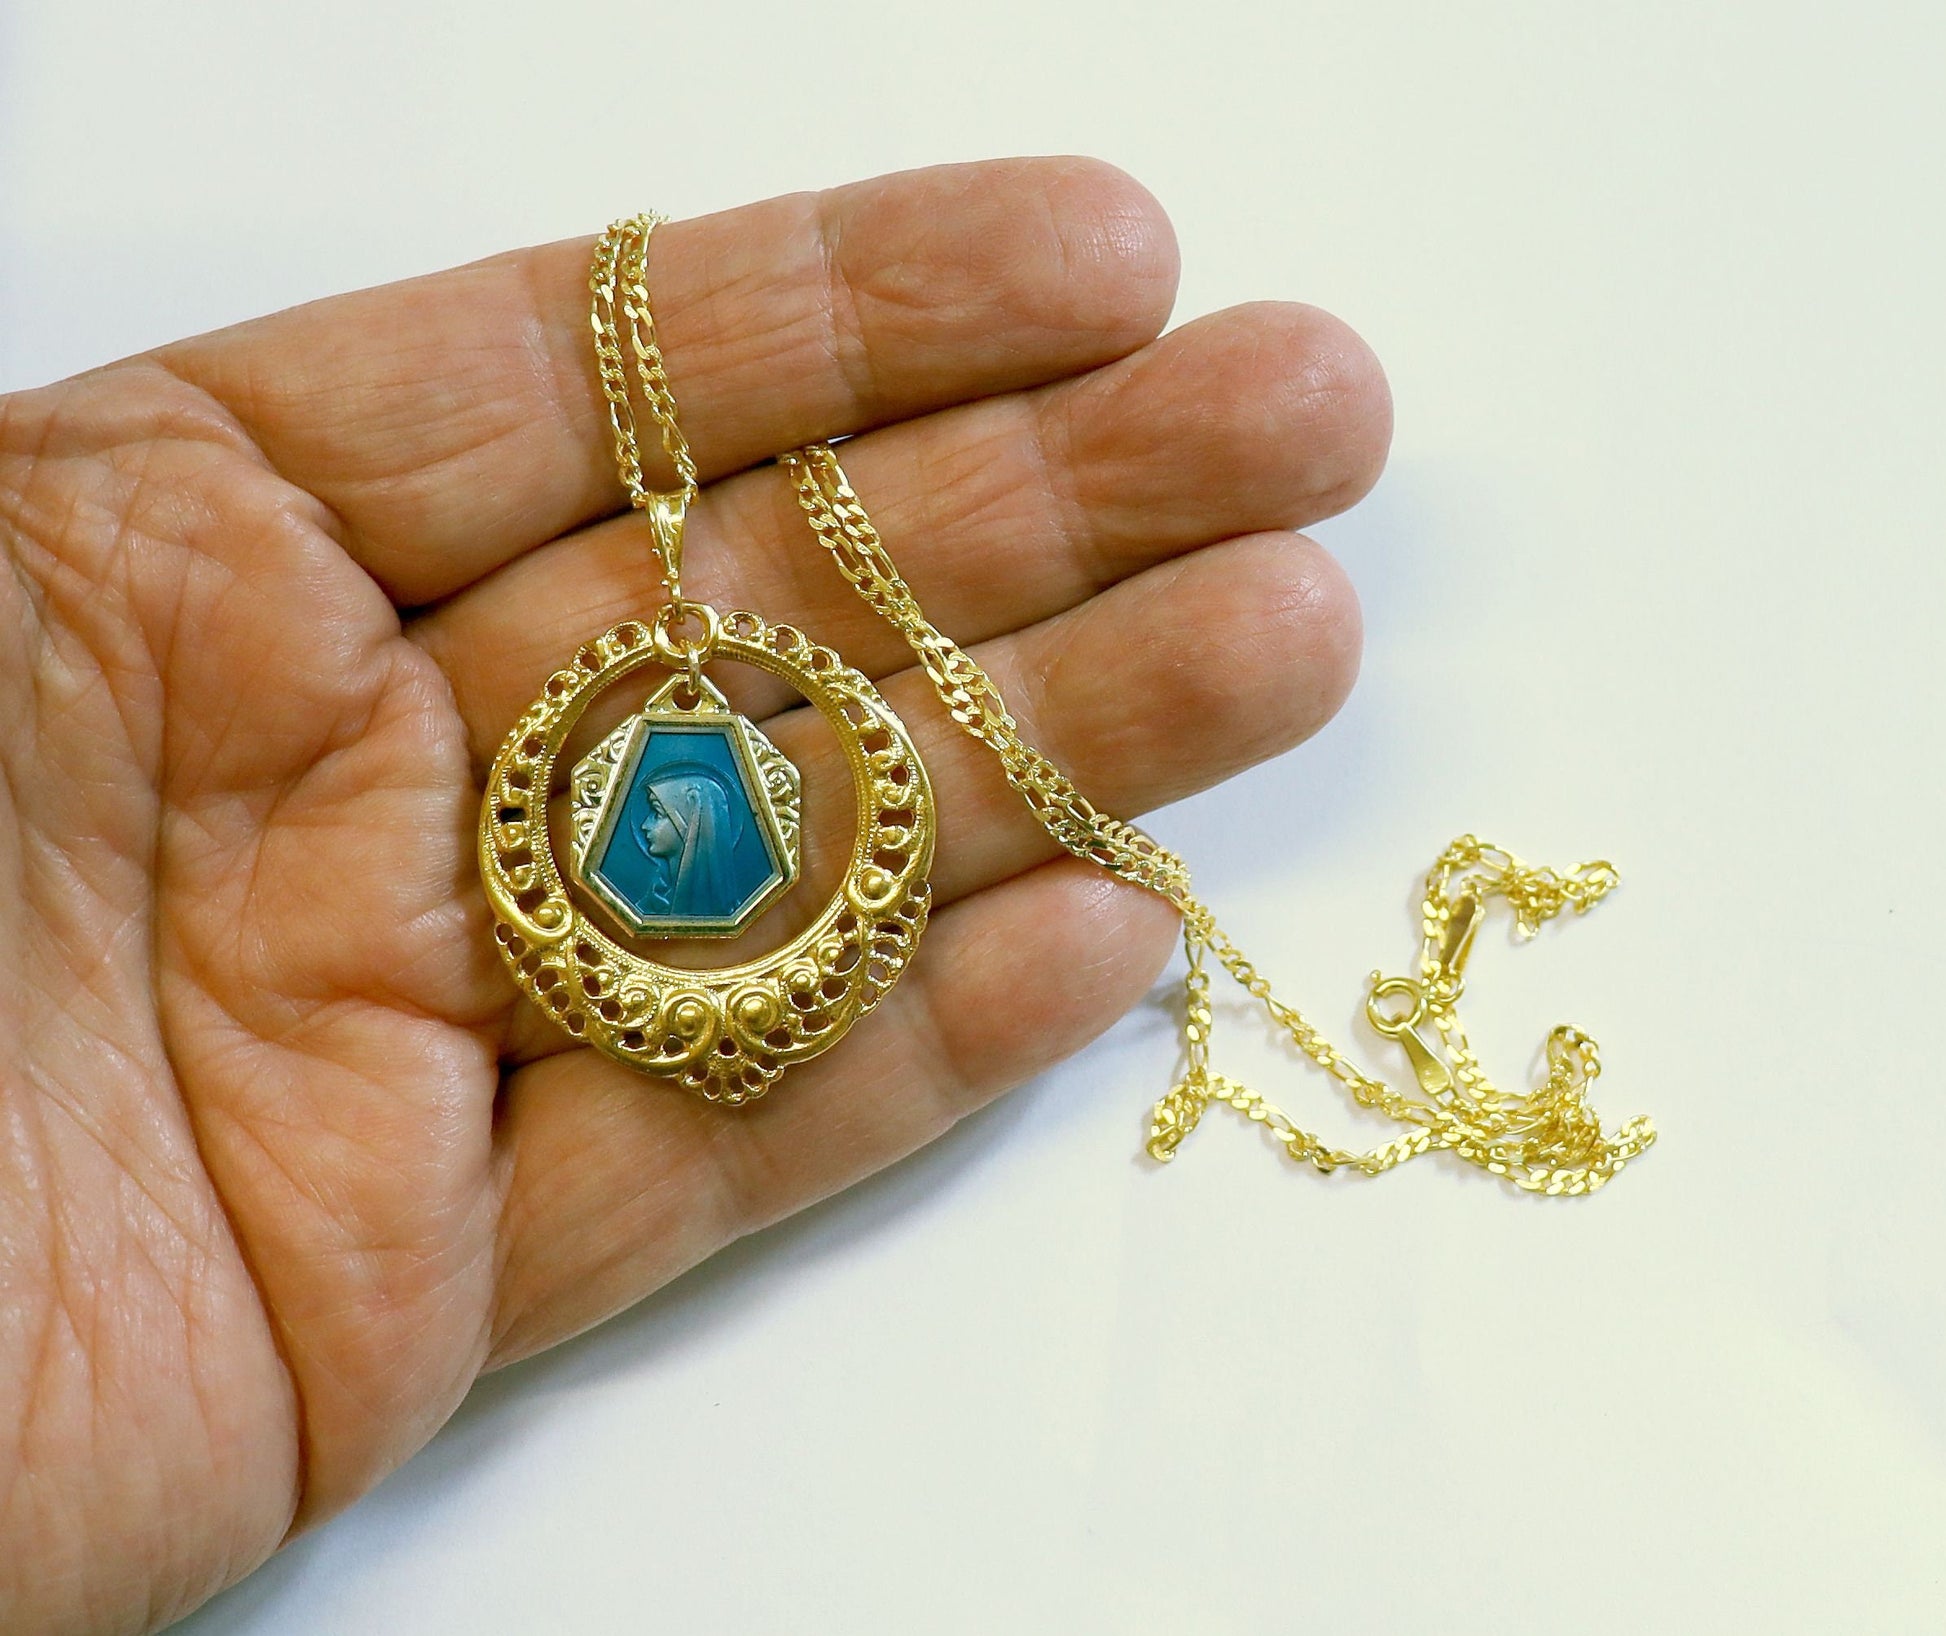 Virgin Mary Blue Enamel Vintage Pendant Medal in Vermeil open Work Frame with Vermeil Chain